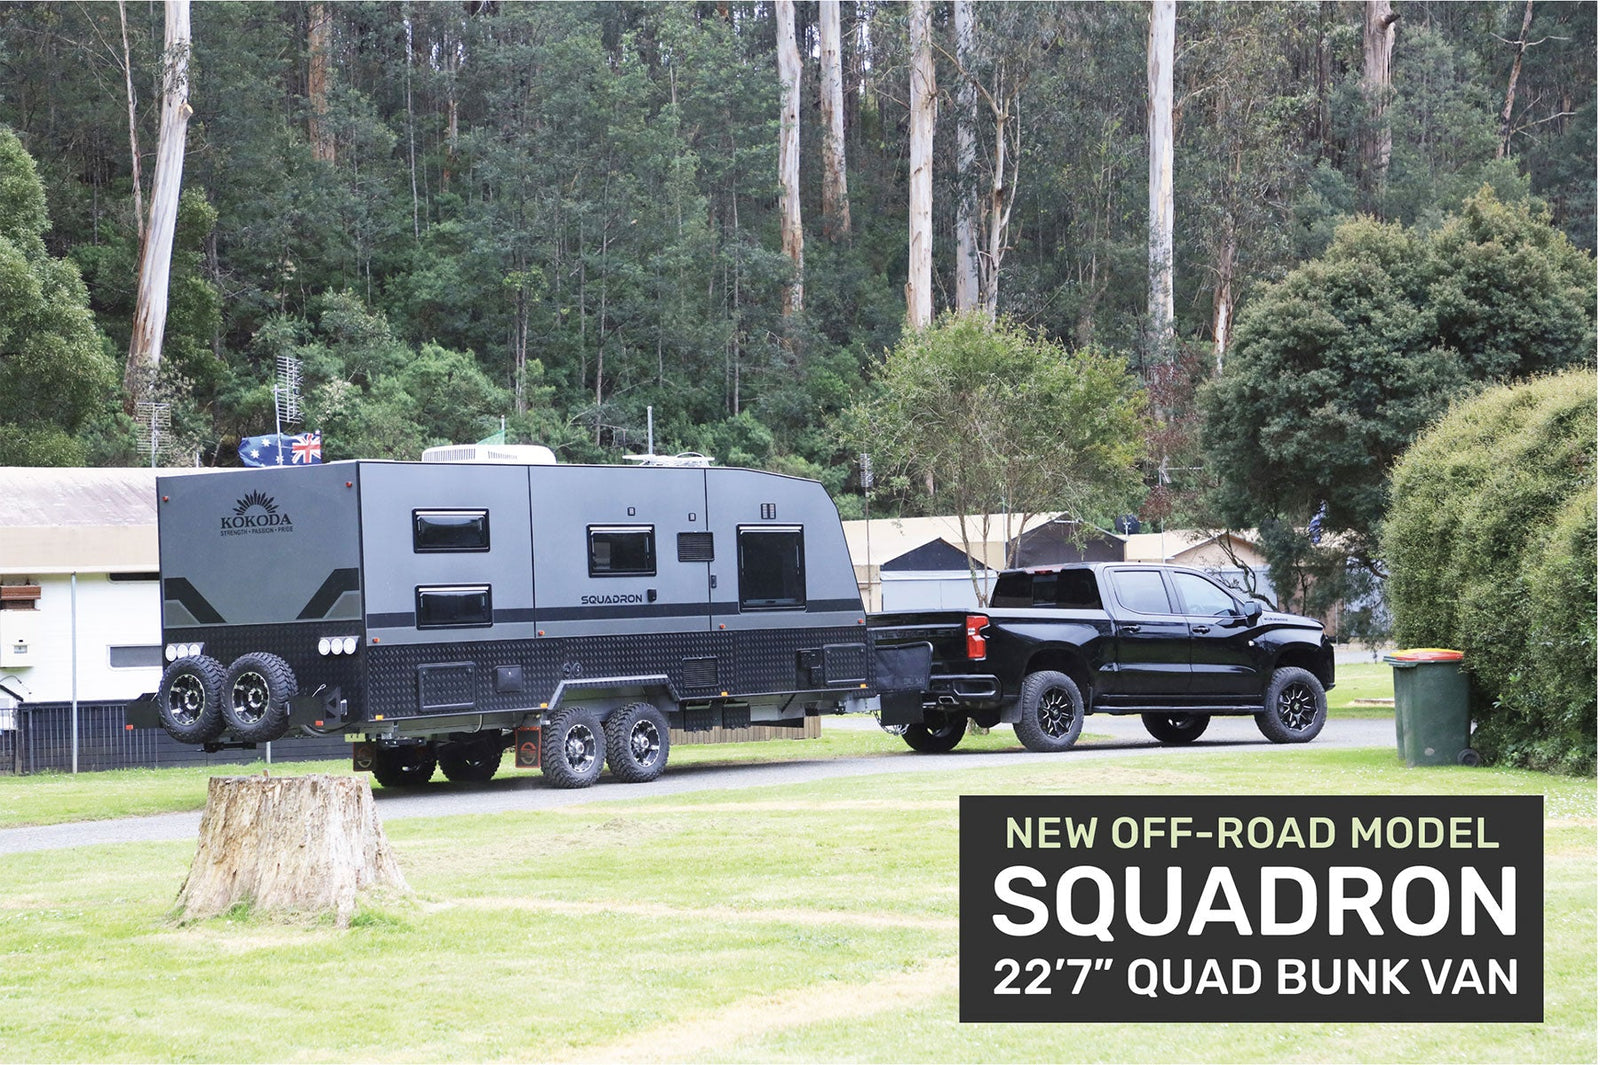 Introducing Kokoda's Squadron 22’7” family van - Caravan World Australia